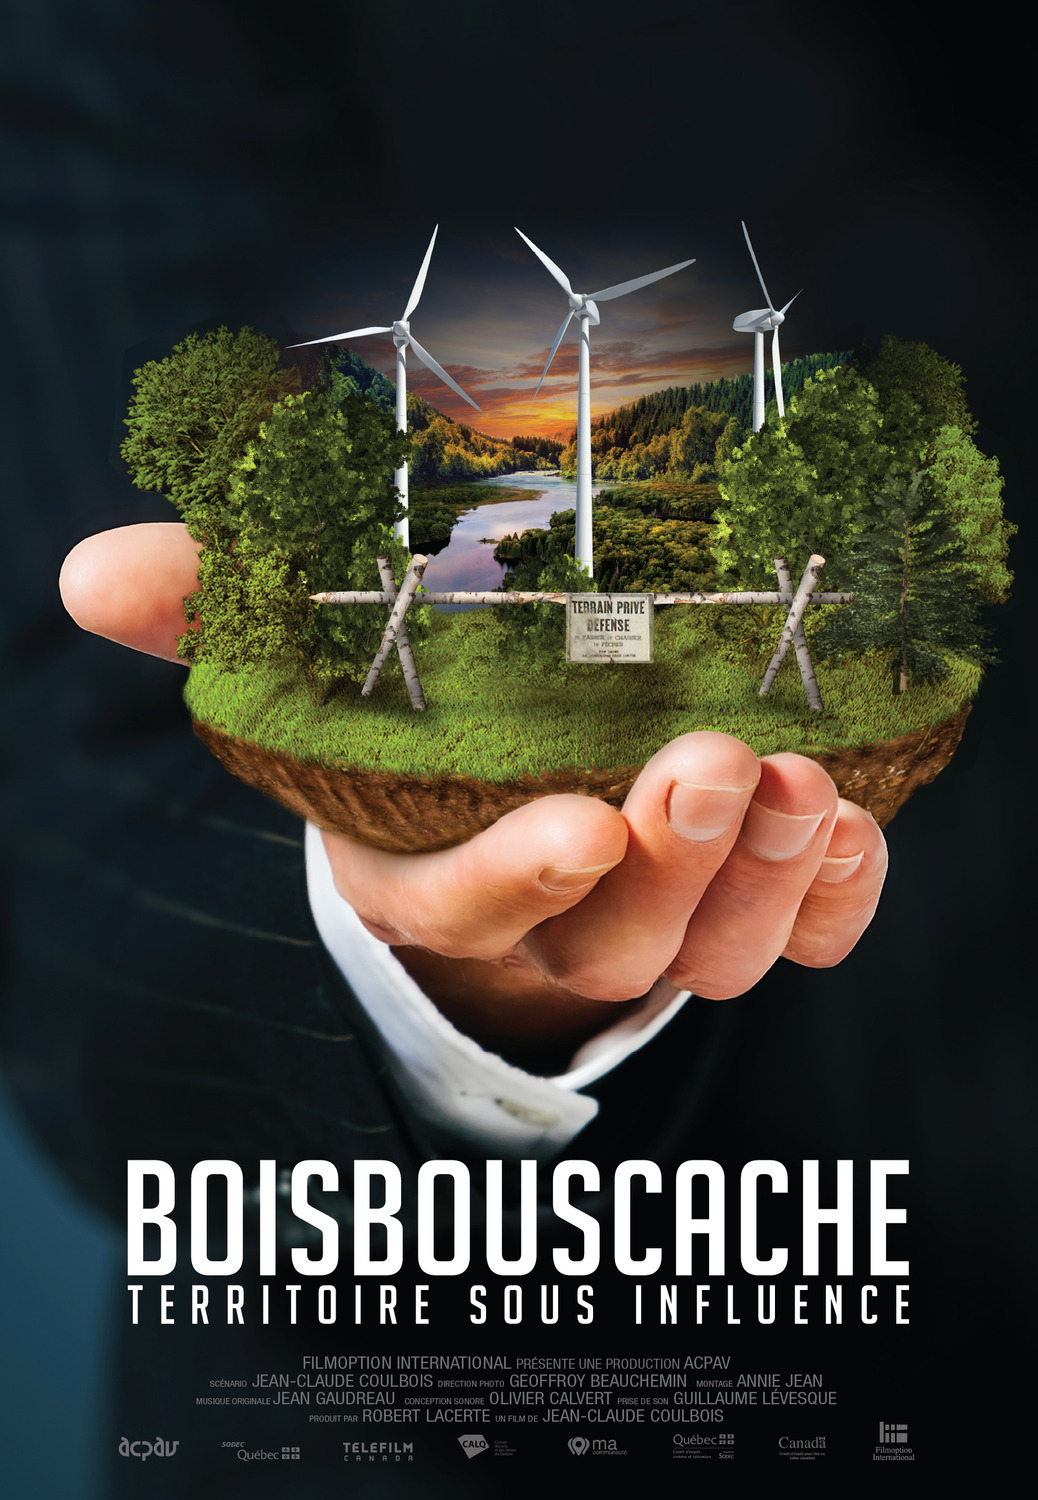 Extra Large Movie Poster Image for Boisbouscache 